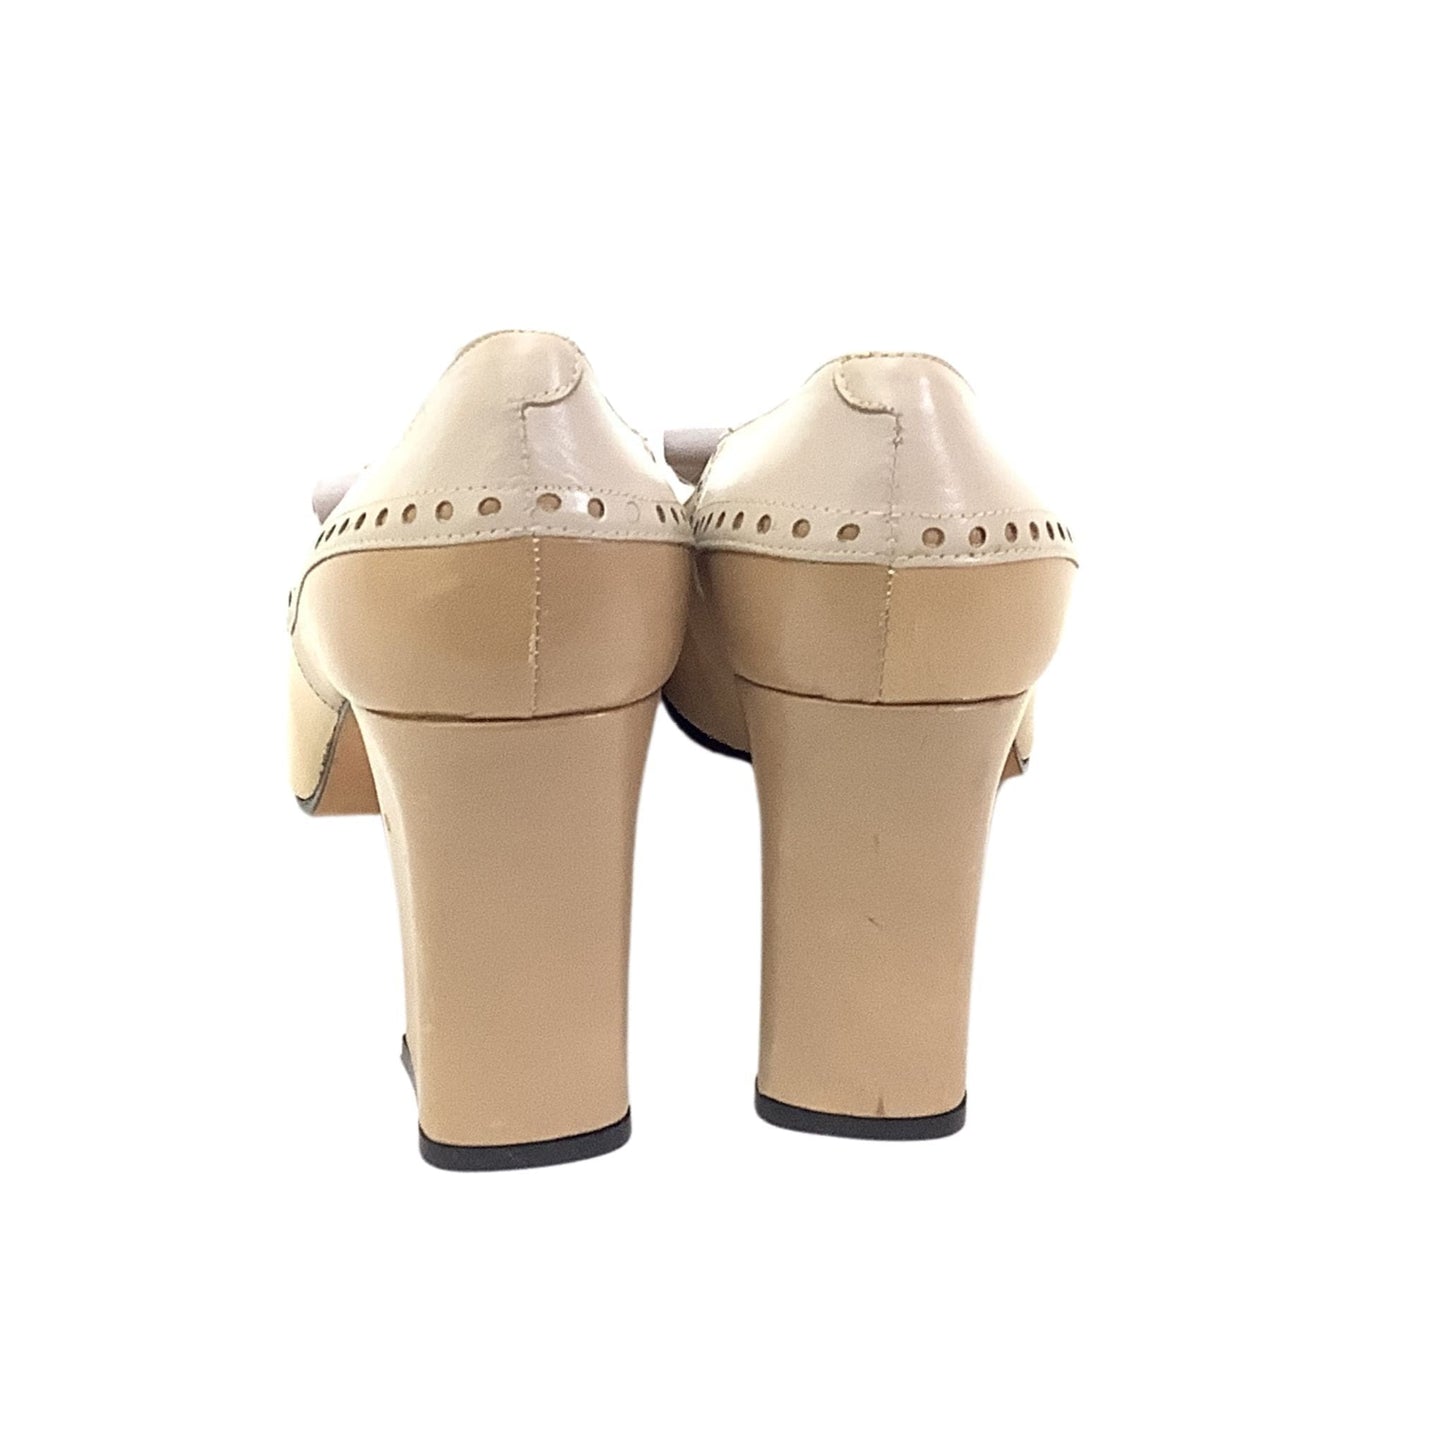 Vintage Spanish Leather Heels 7 / Beige / Vintage - 1990s